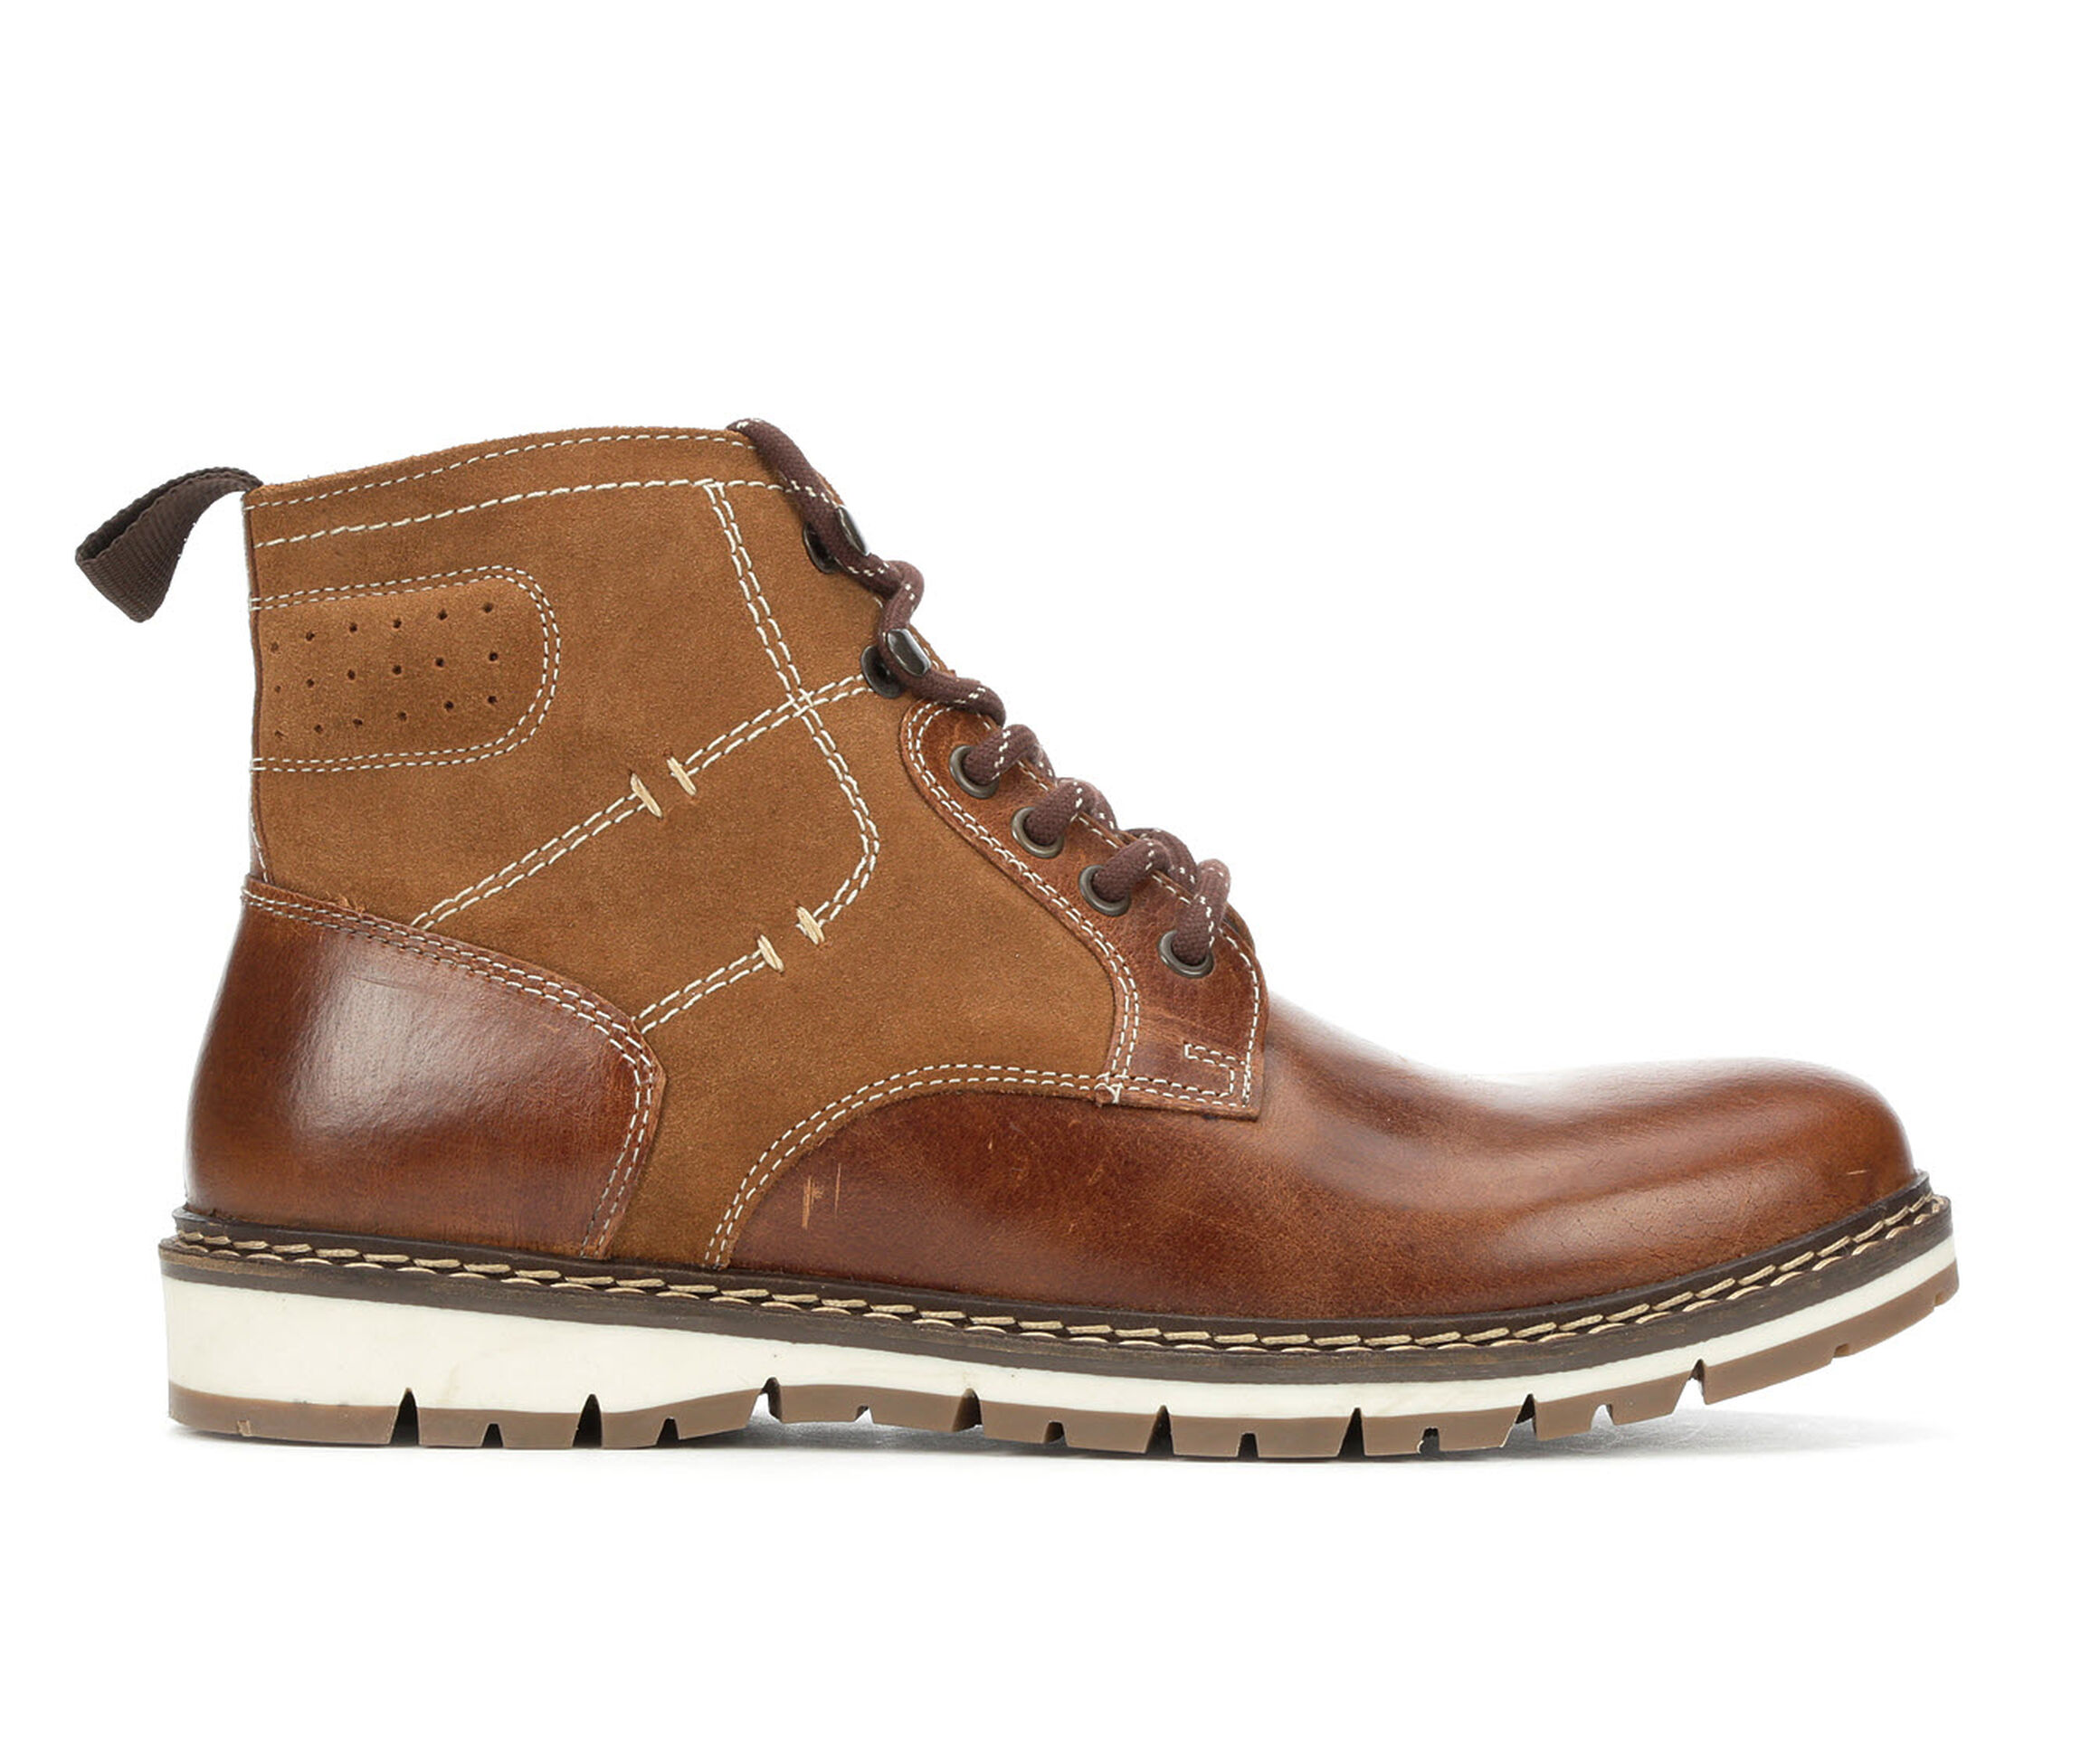 Crevo Drayton Men's Boots (Brown Leather)